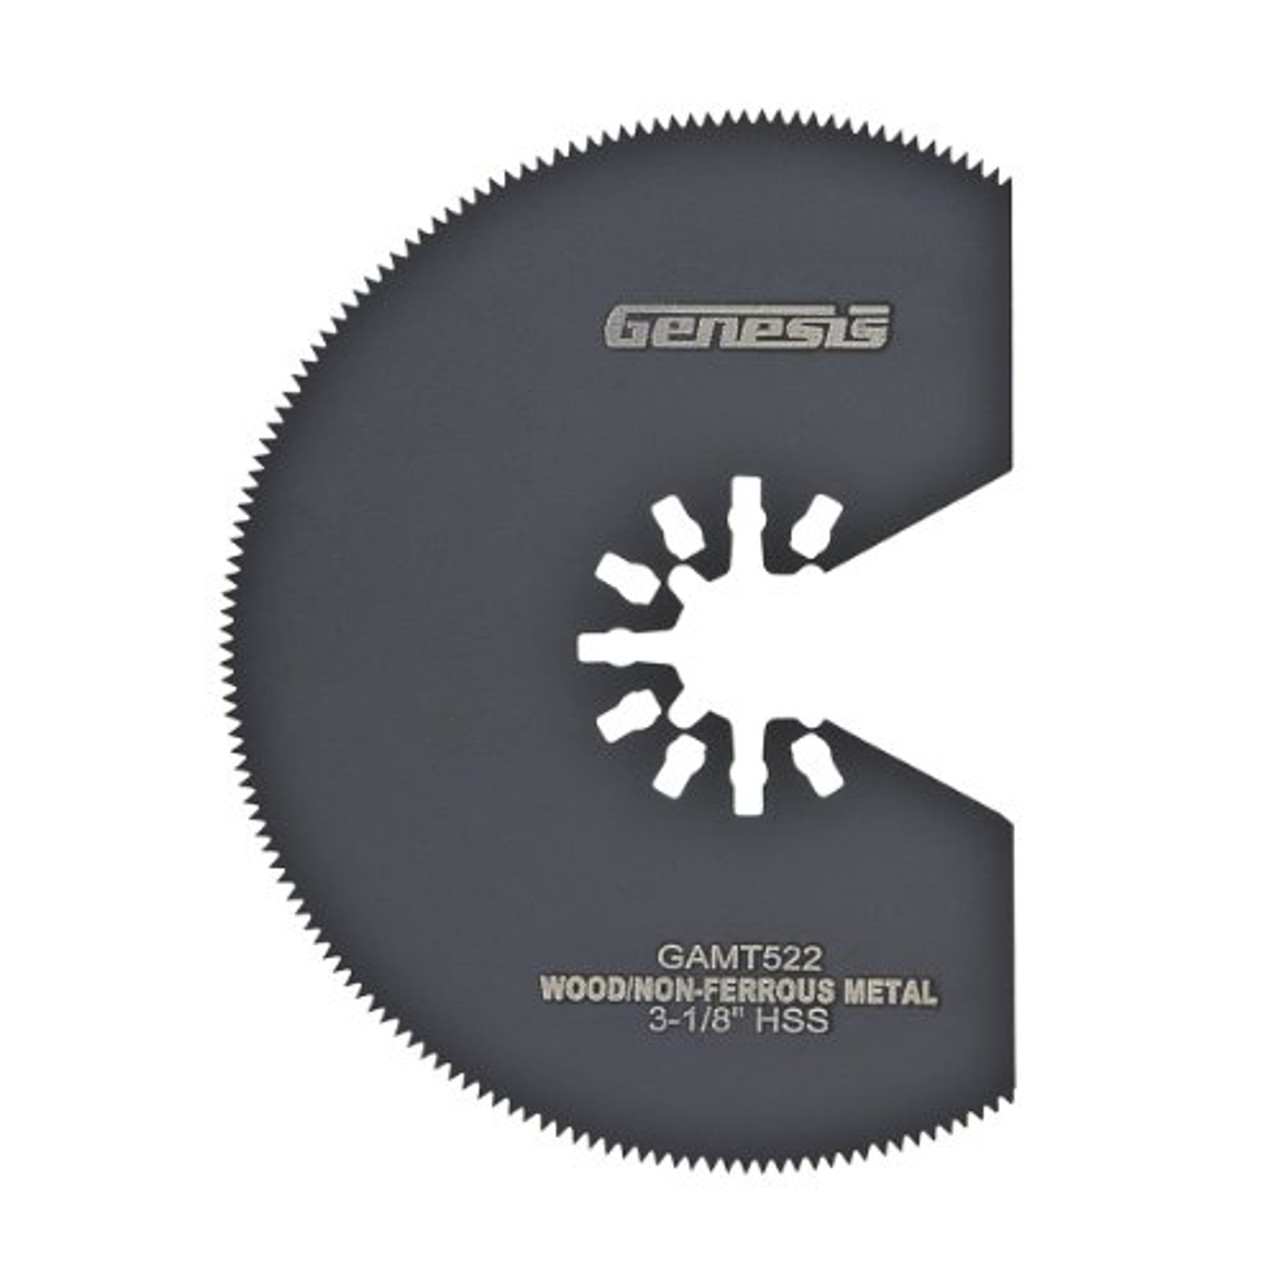 Genesis GAMT522 Universal Quick-Fit 3 1/8" HSS Segmented Oscillating Multi-Tool Quick-Release Flush Saw Blade - 1 Blade